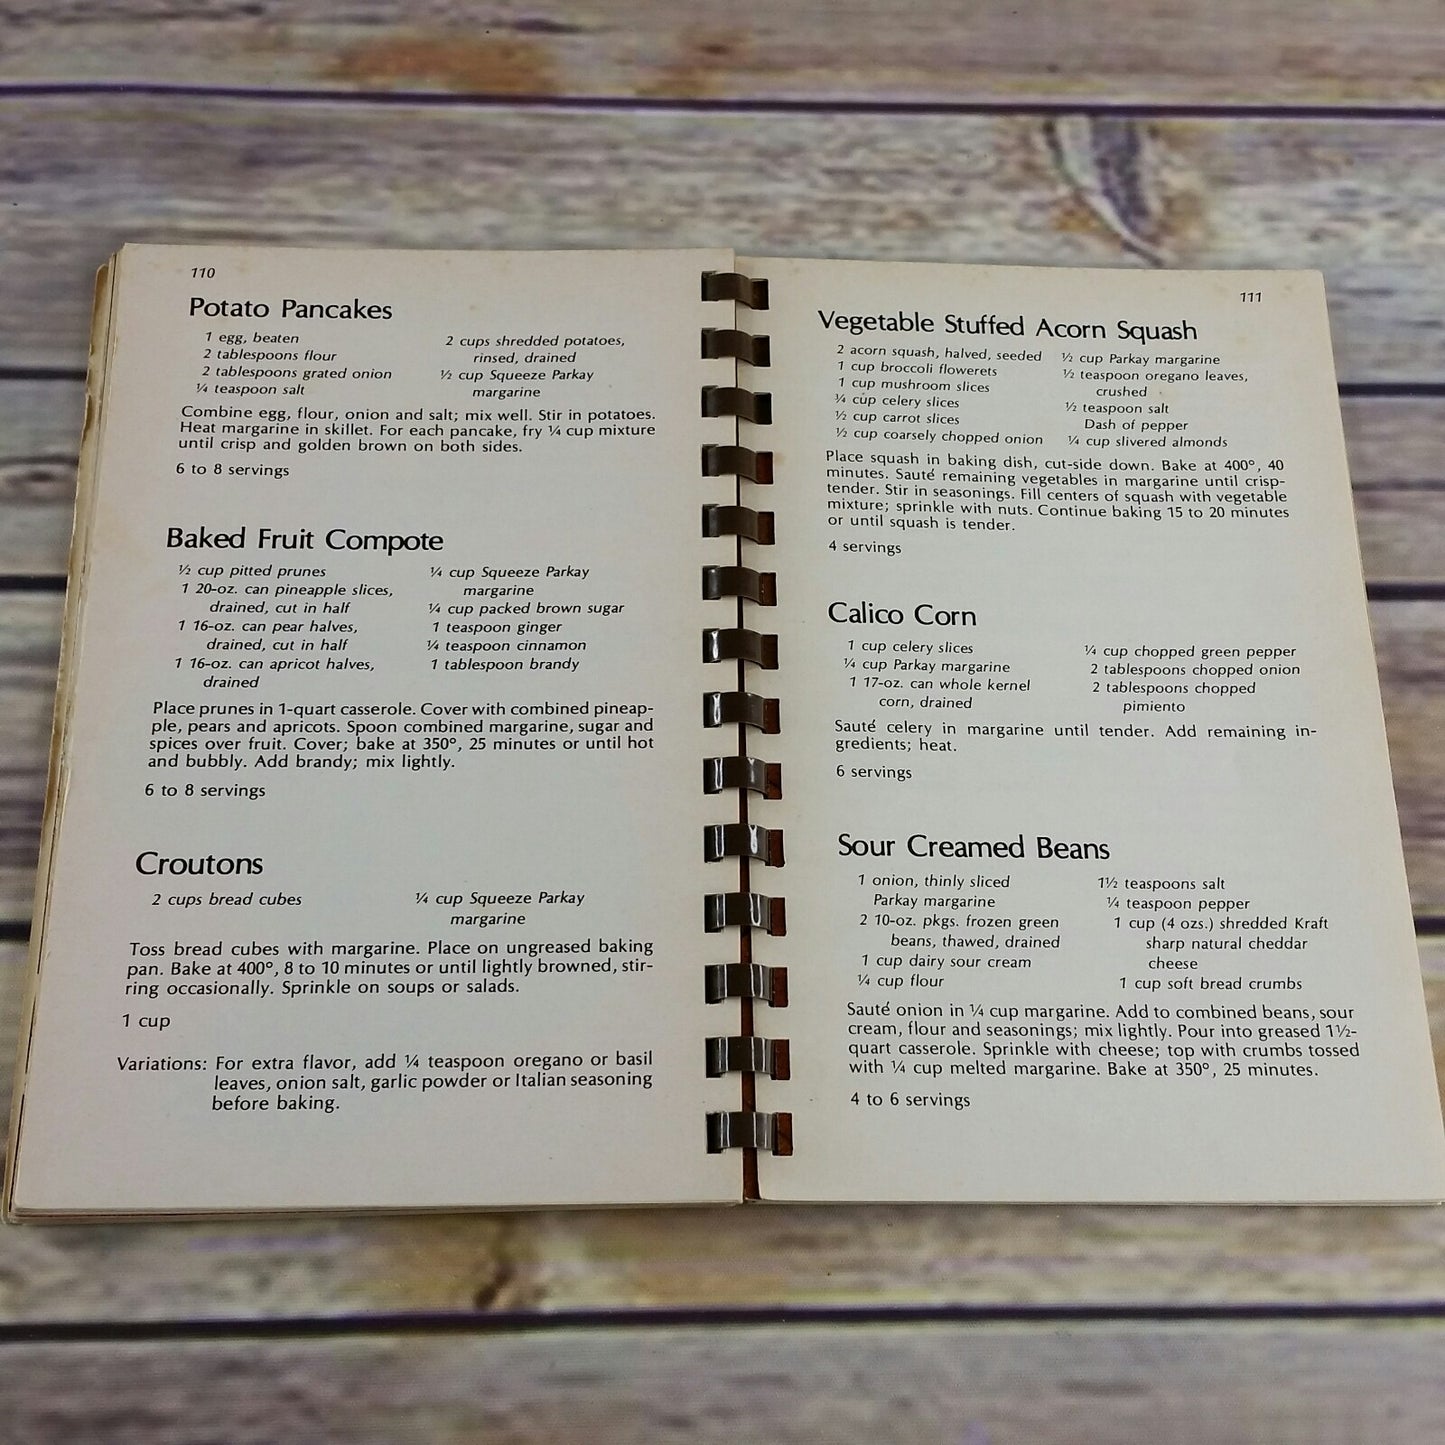 Vintage Cookbook The Parkay Margarine Cookbook Recipes 1980 Spiral Bound Kraft Promo Breads Desserts Sides - At Grandma's Table